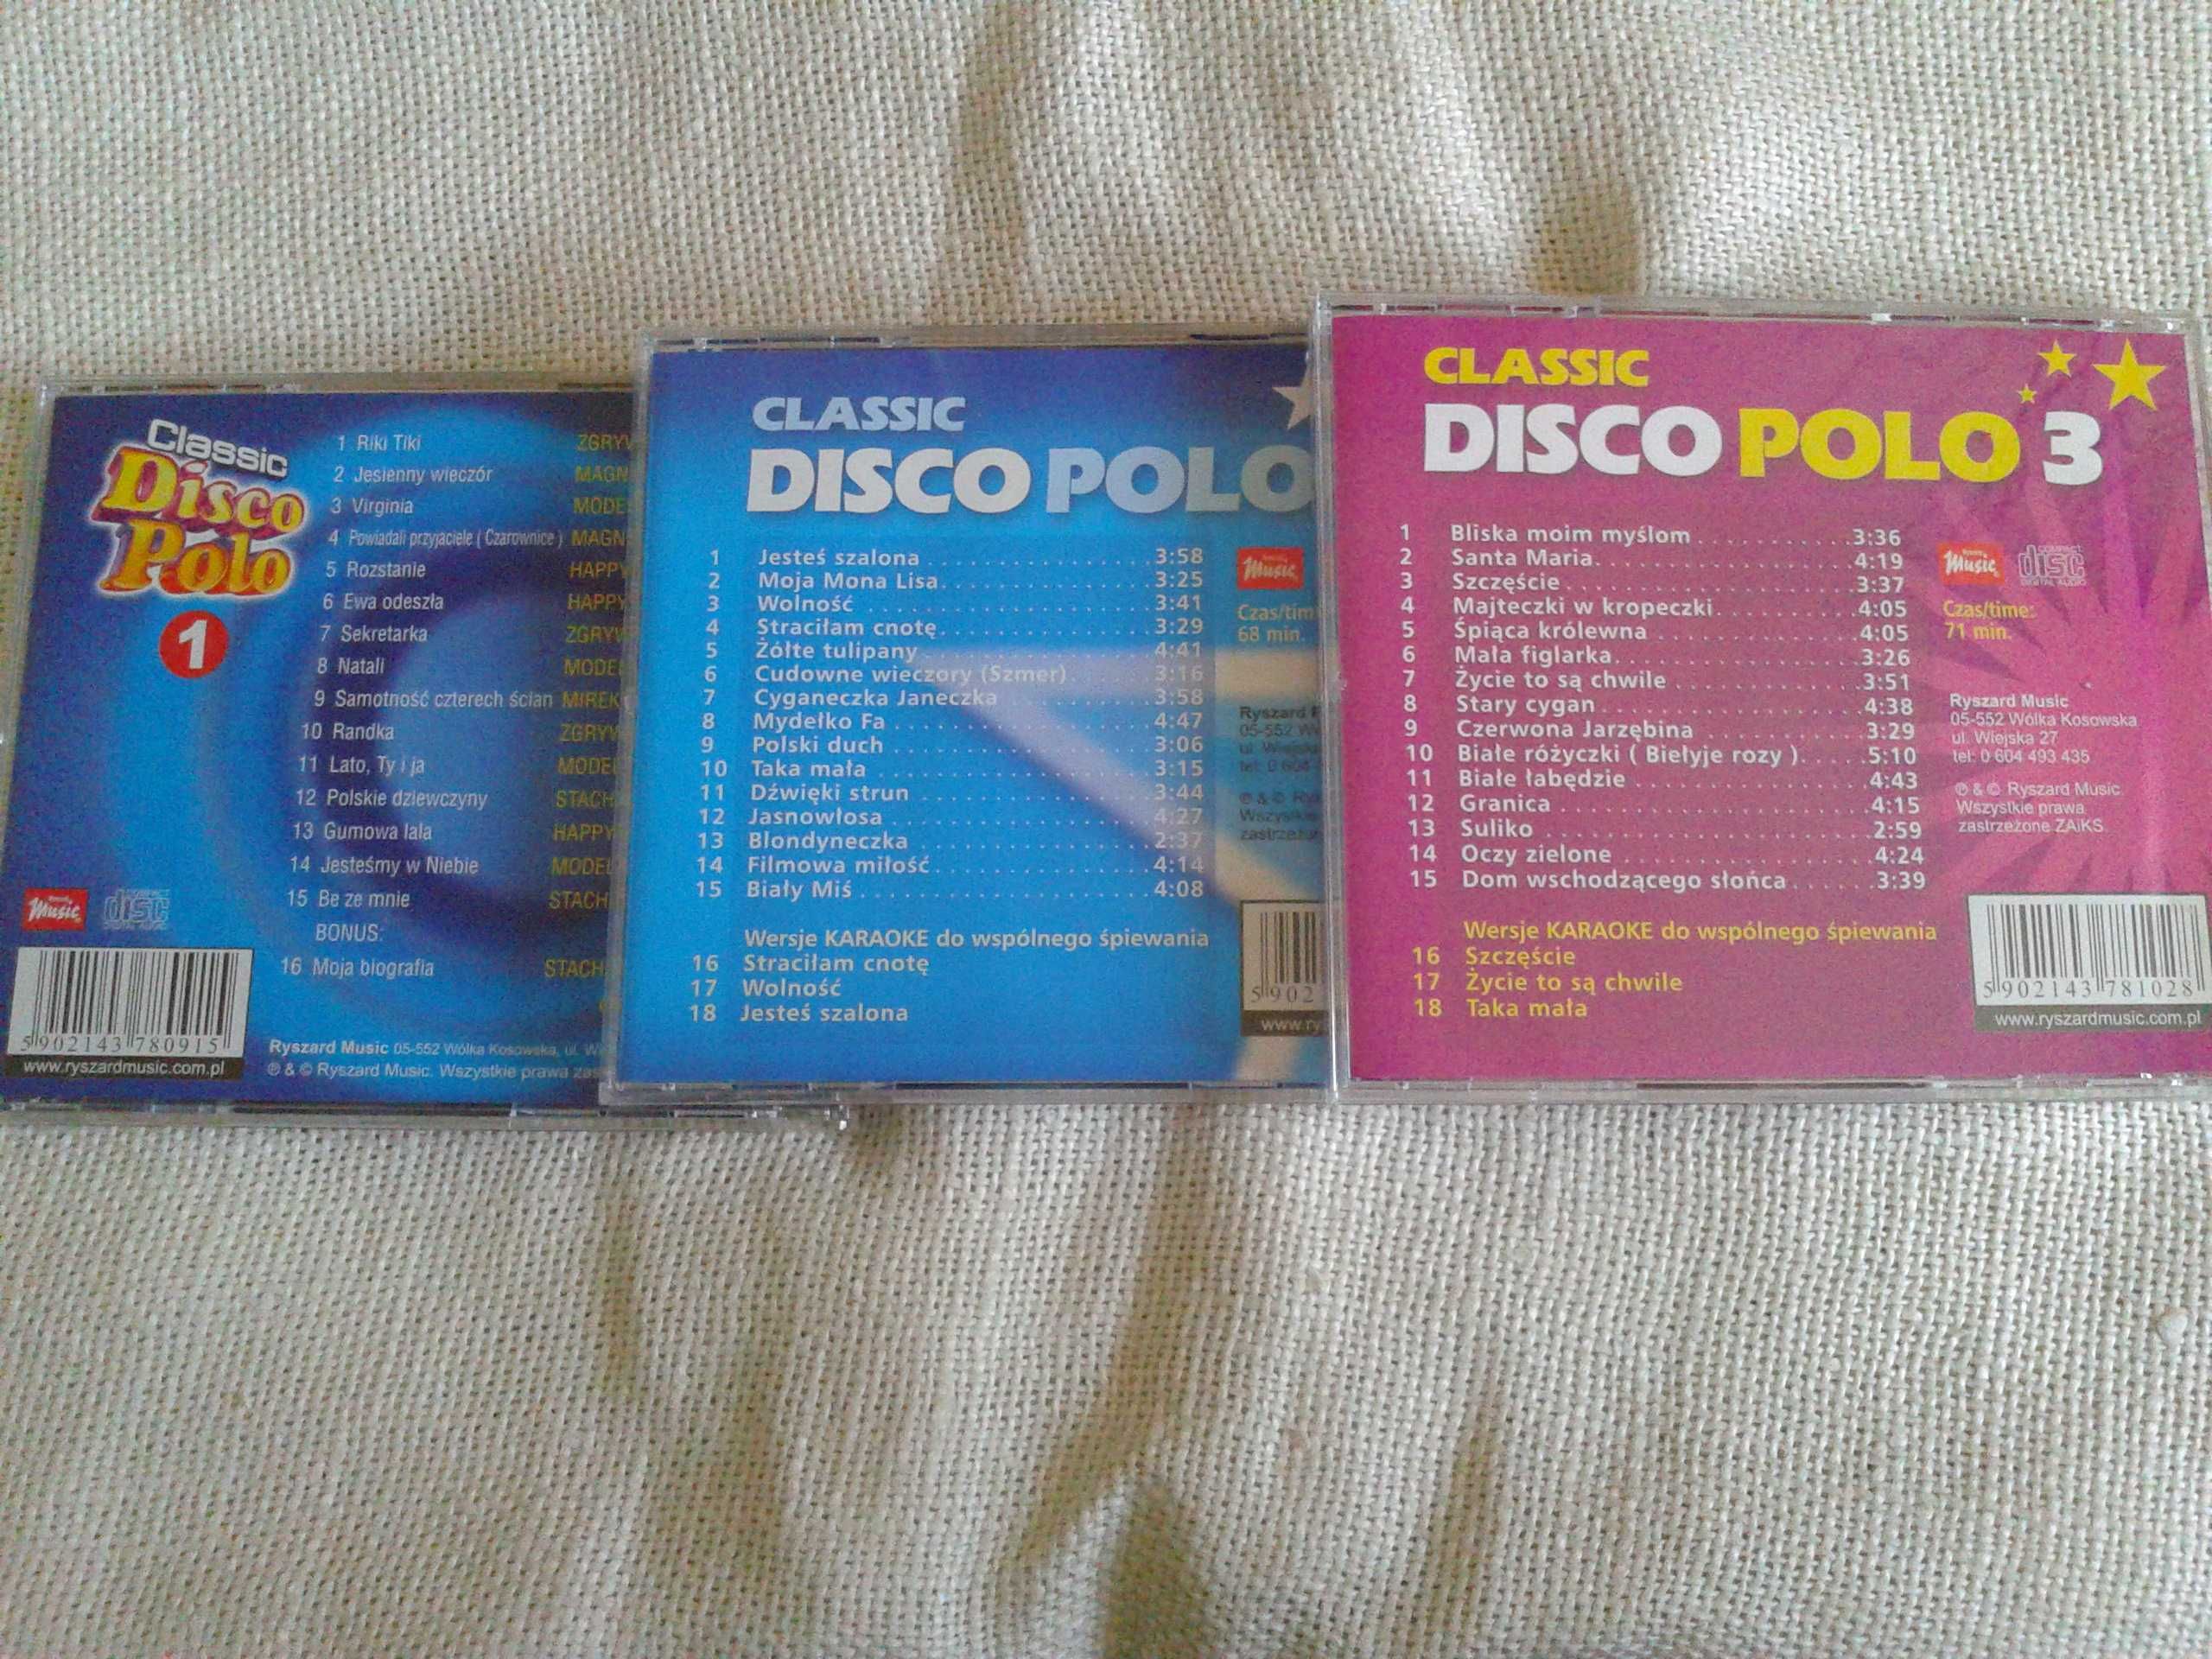 Classic Disco Polo  3CD